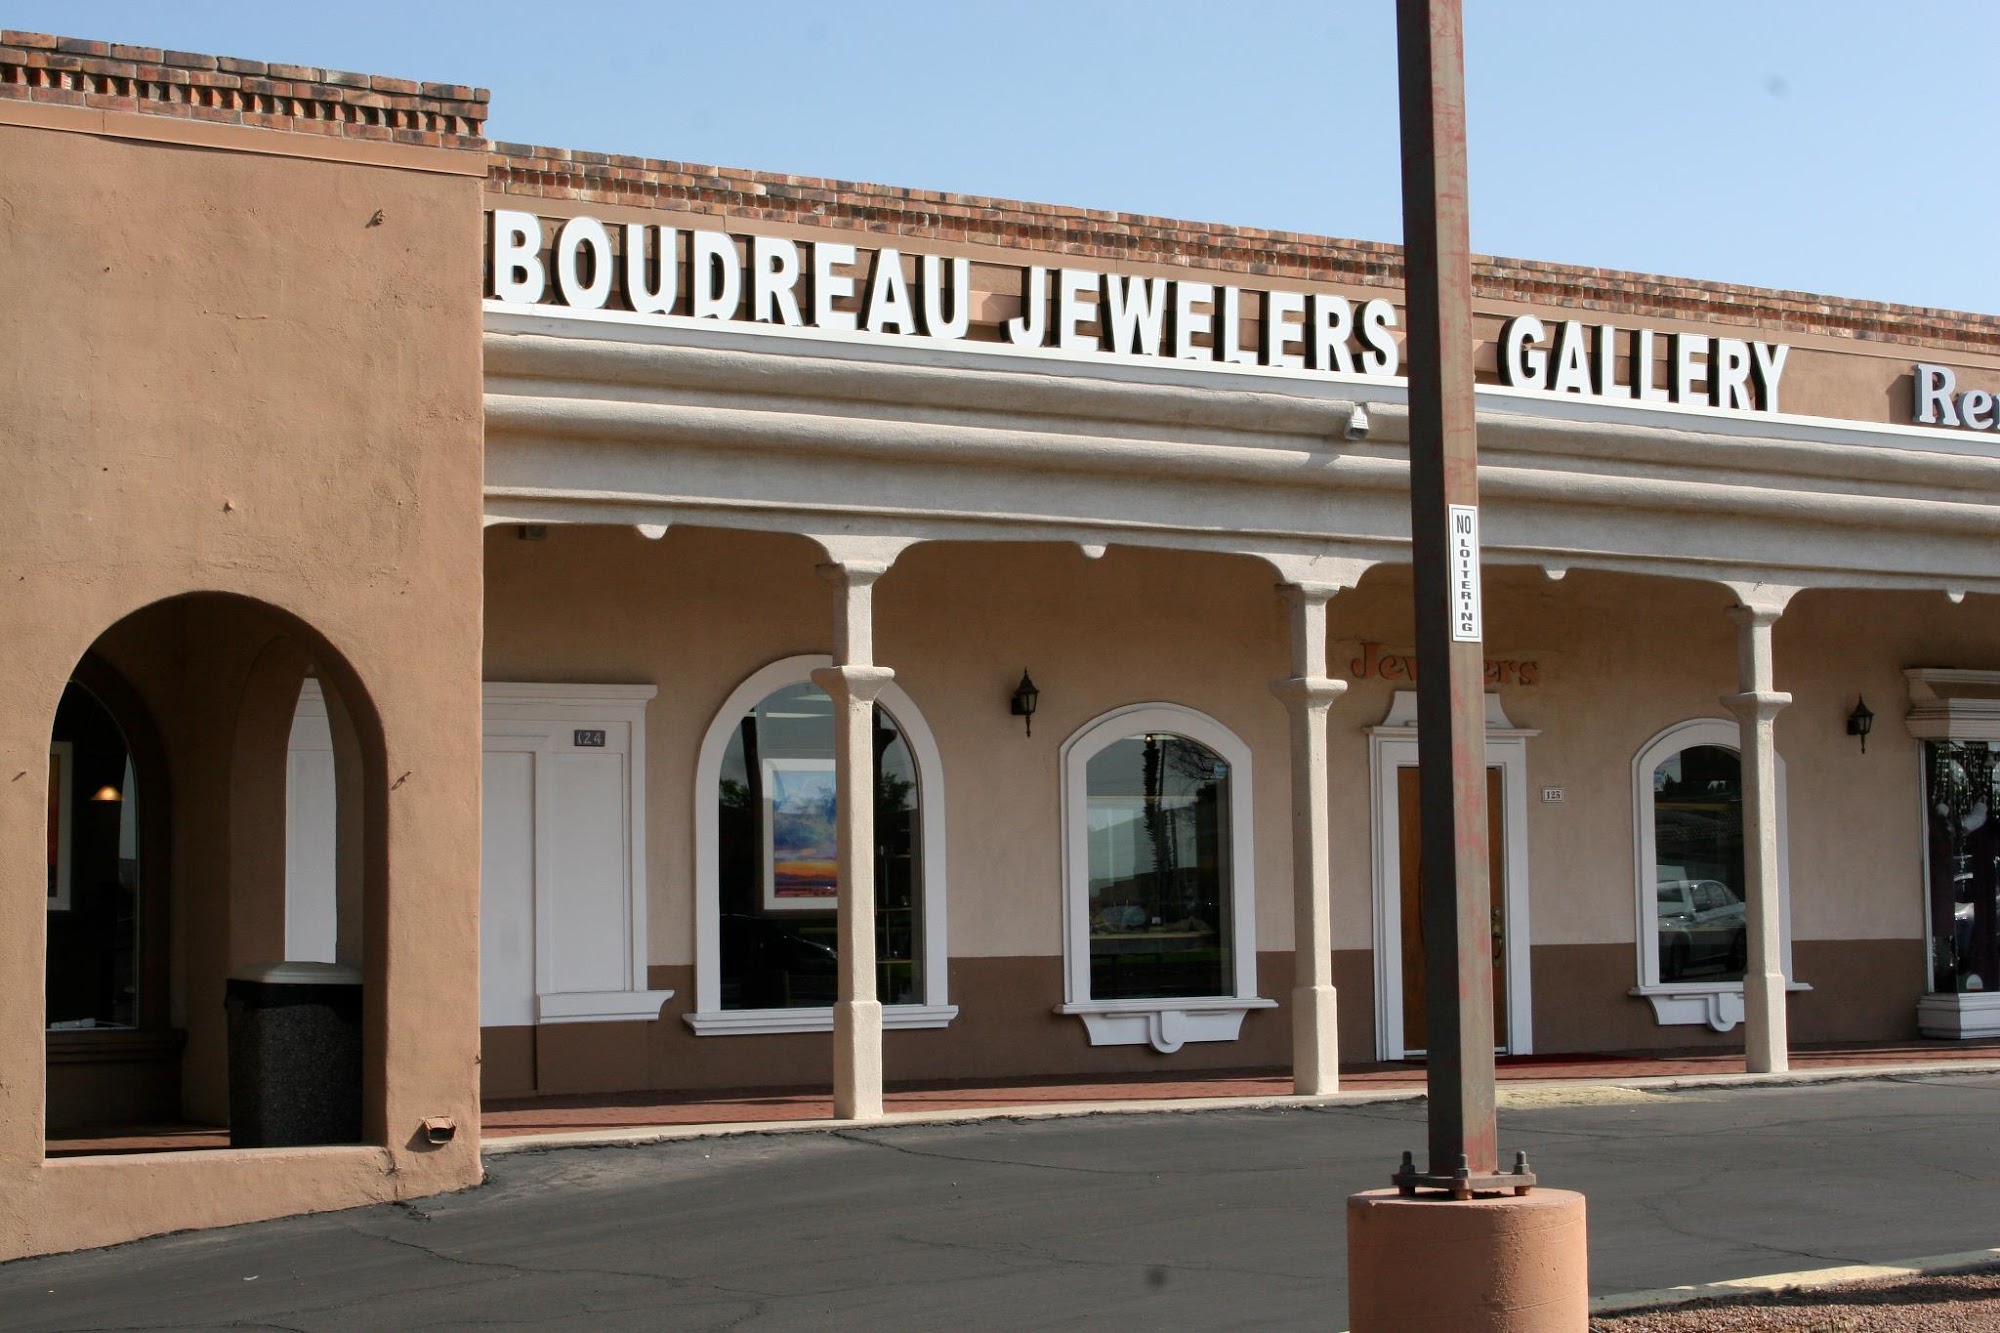 Boudreau Jewelers & Gallery